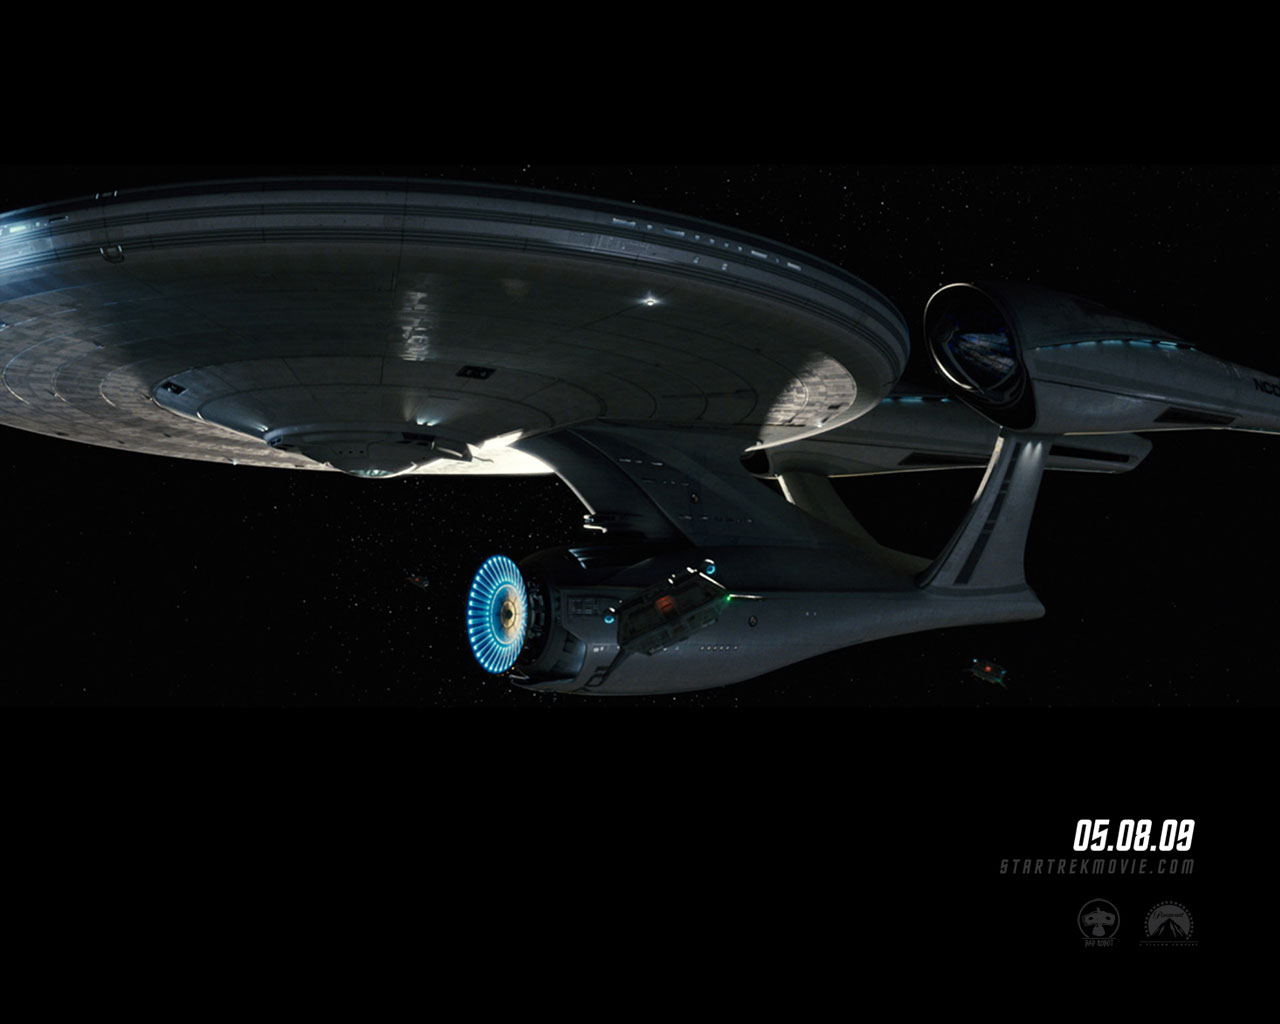 "Star Trek" desktop wallpaper number 10 - the 2009 movie version of the USS Enterprise NCC-1701 (1280 x 1024 pixels)